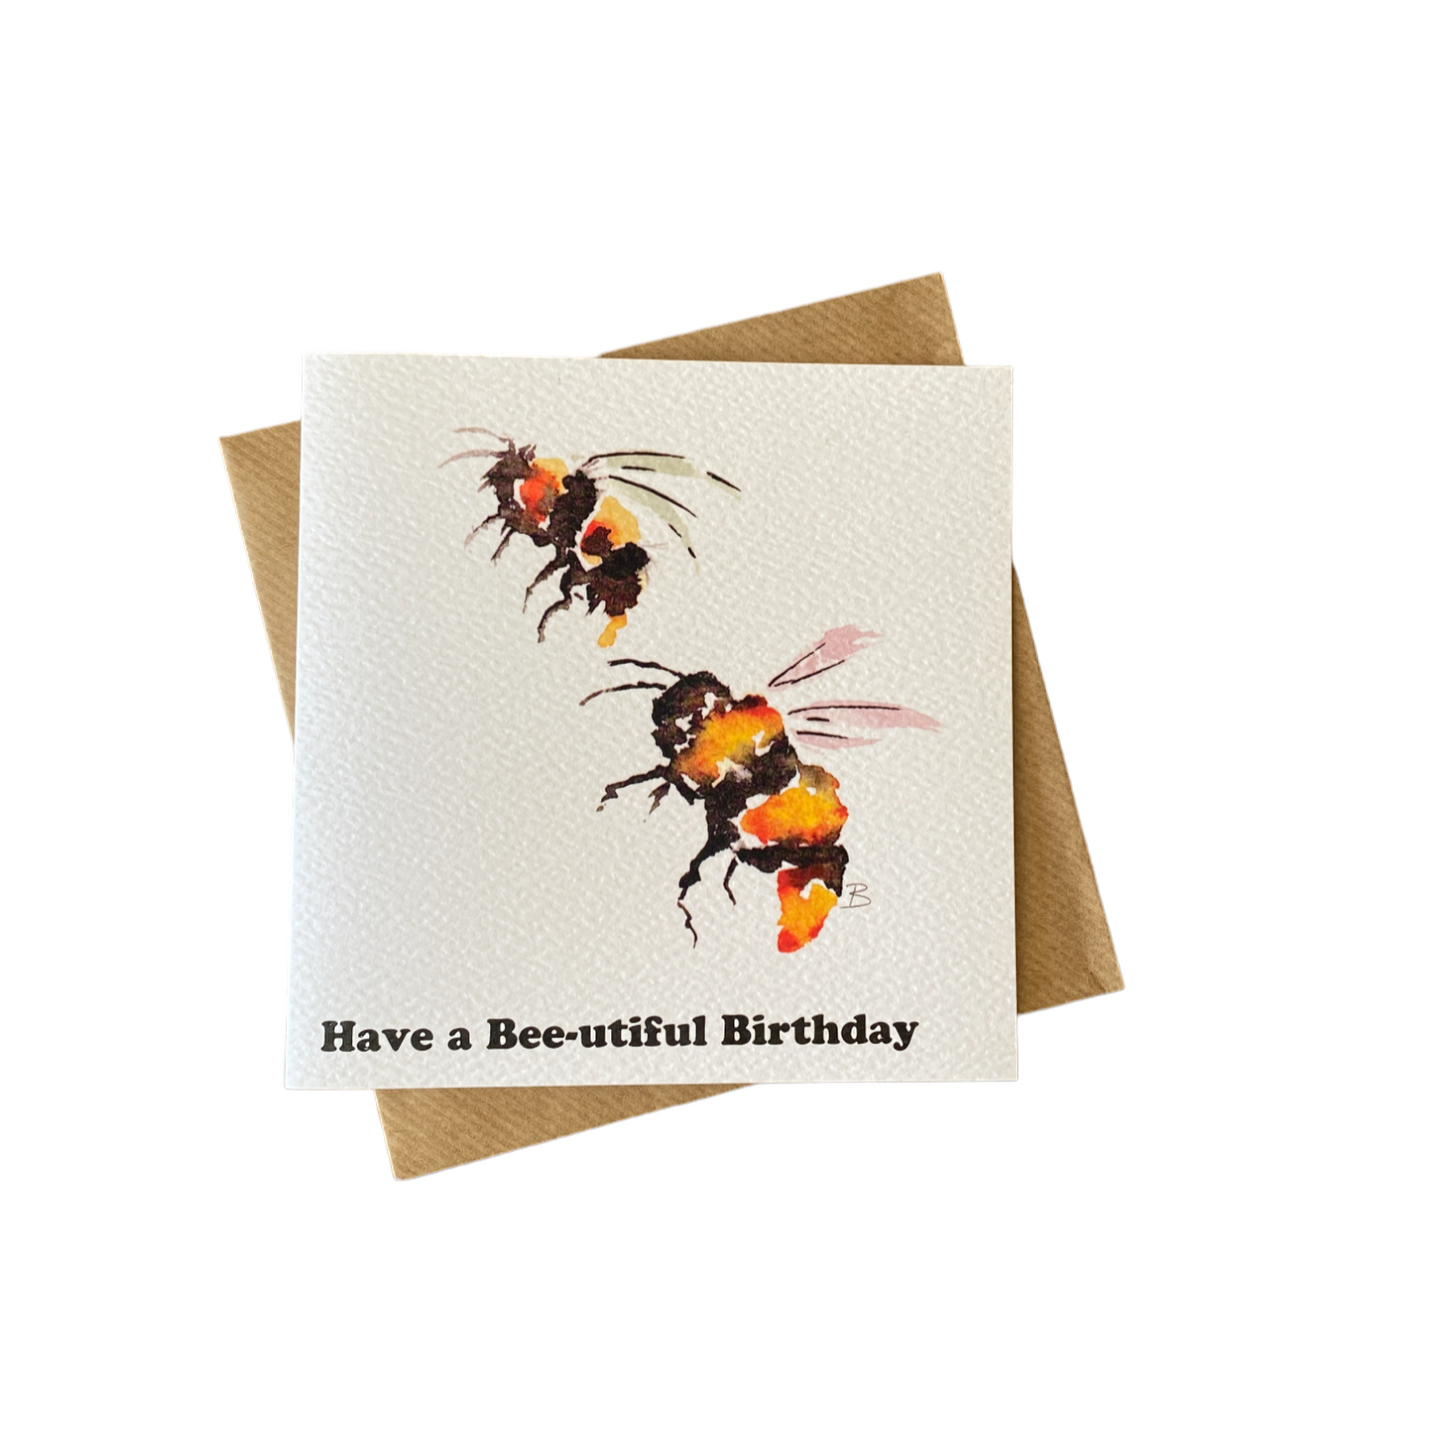 'Have a Bee-utiful Birthday' Funny Bee Birthday Card